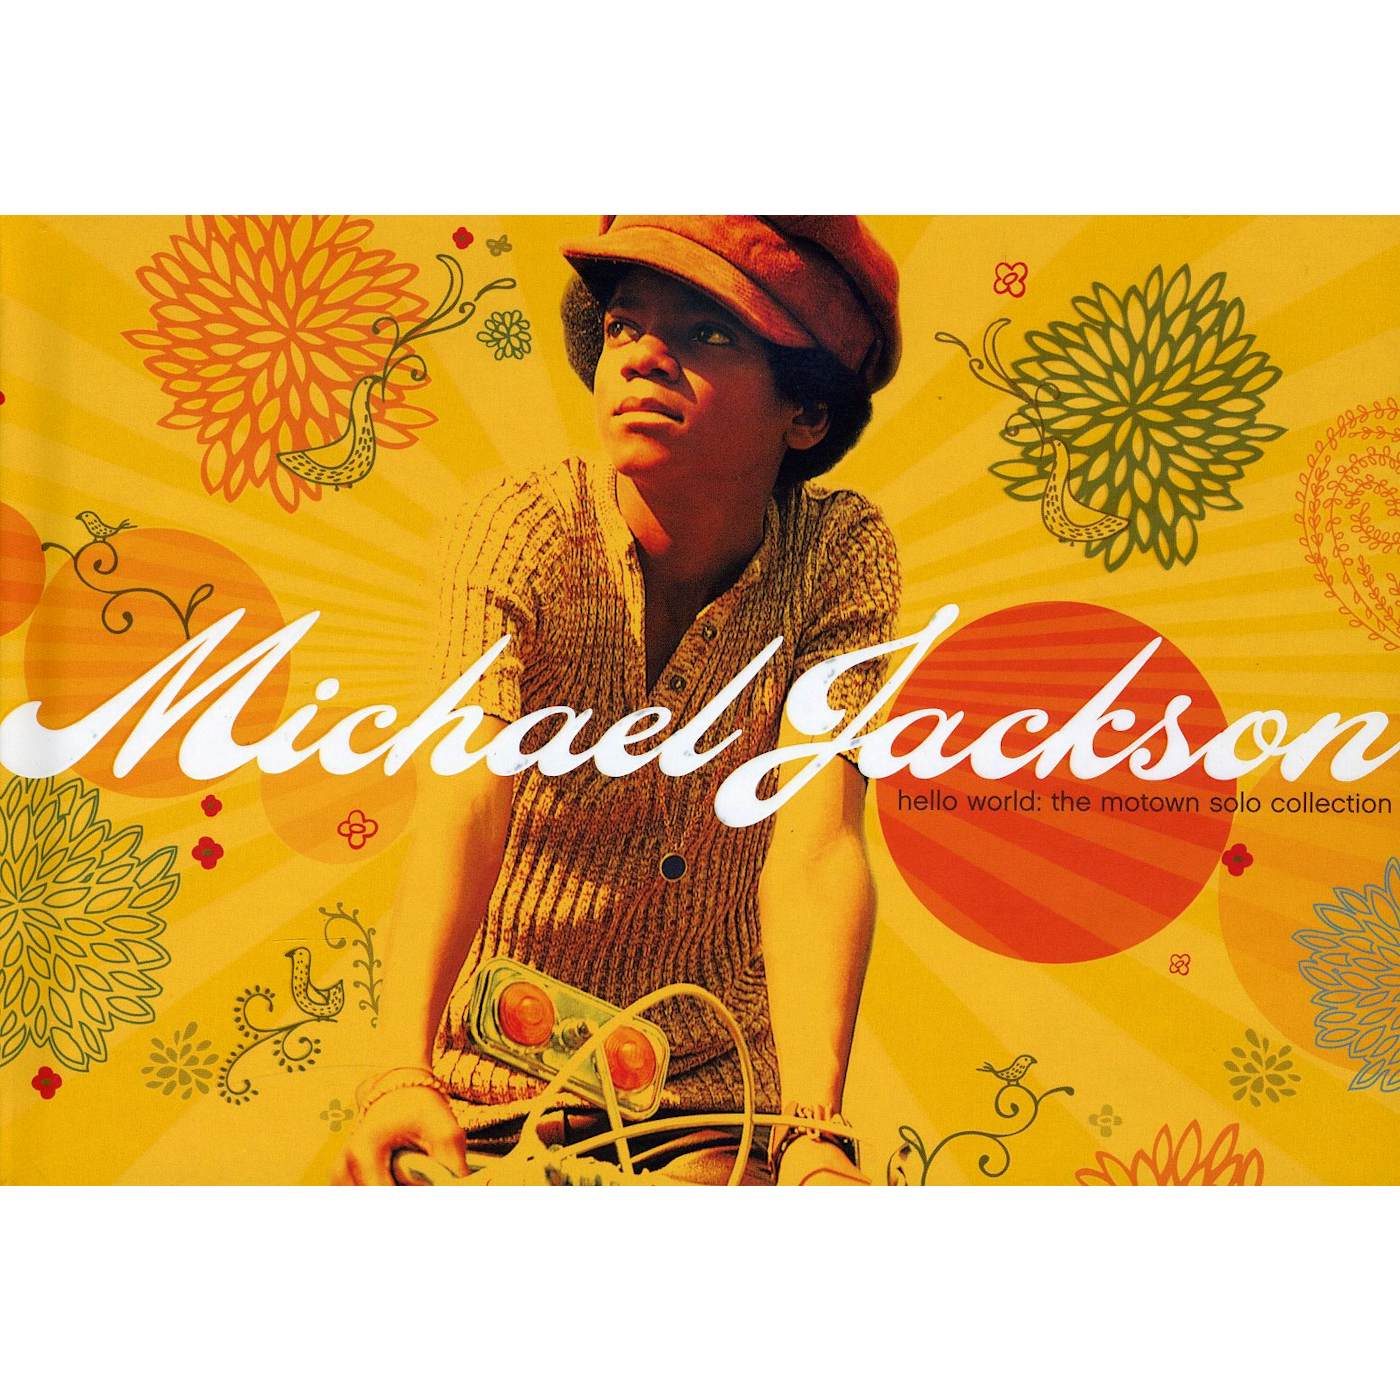 Solo collection. Michael Jackson Farewell my Summer Love 1984 album. Michael Jackson Vinyl.